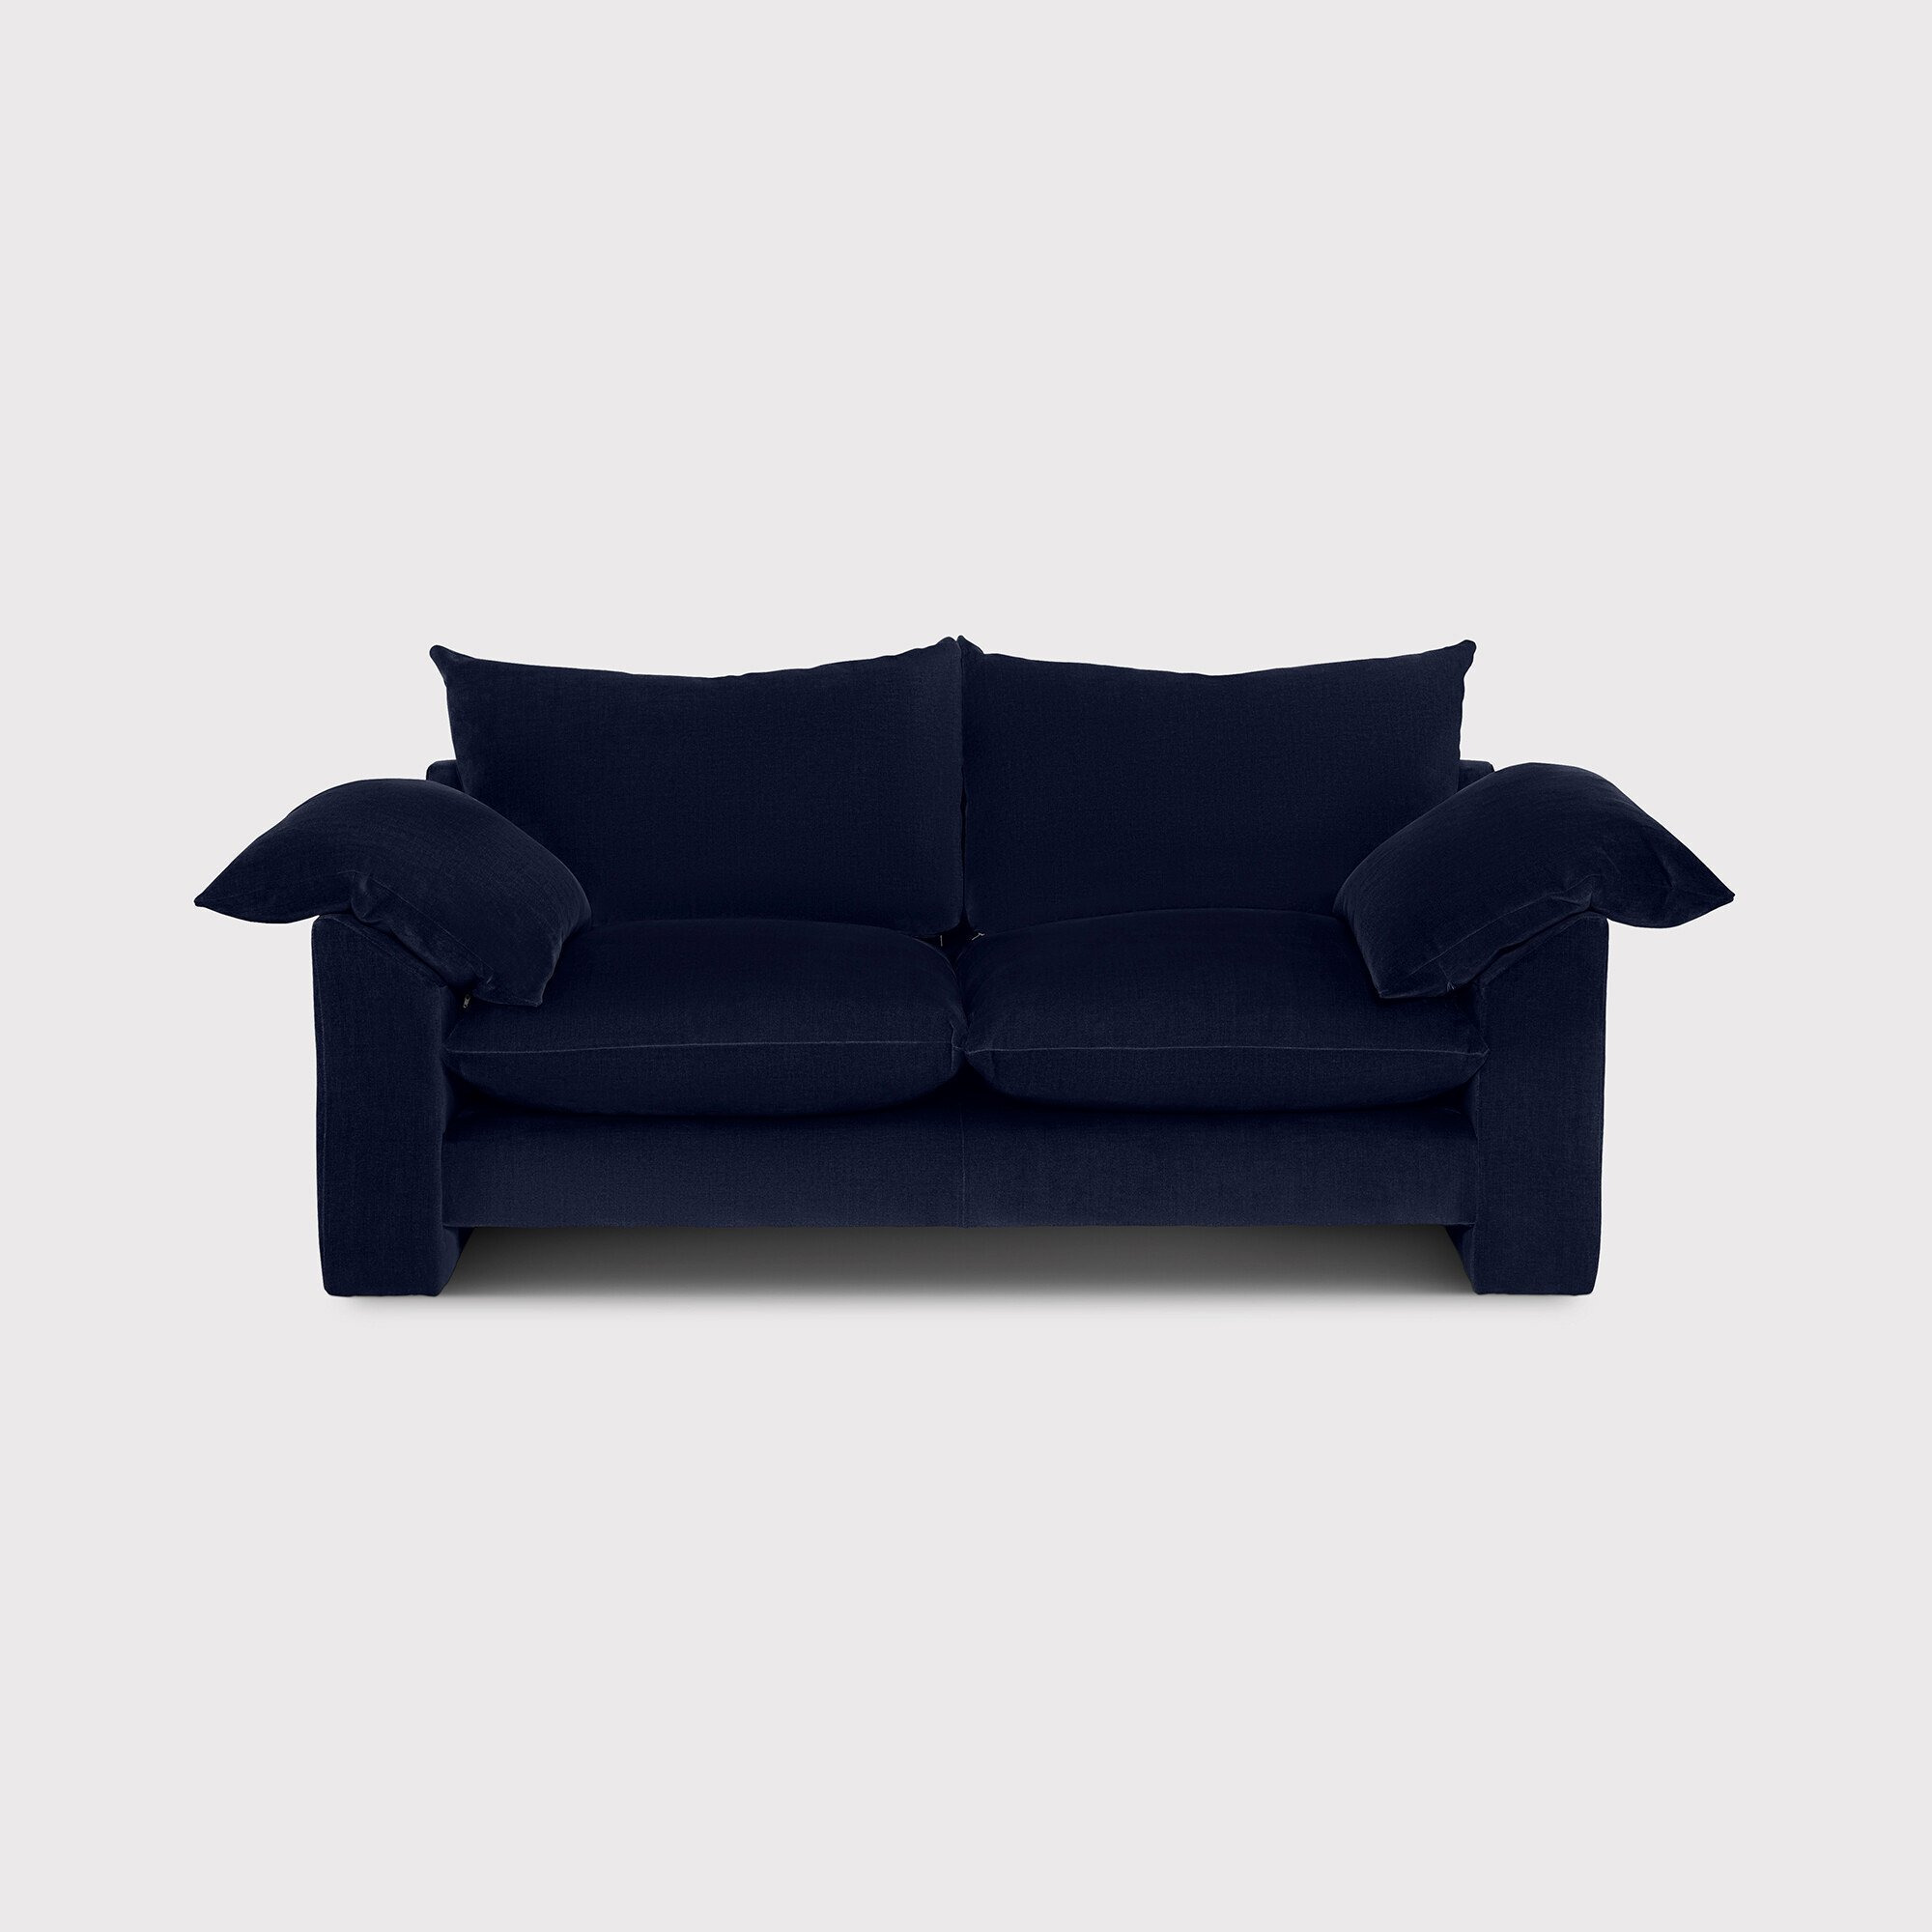 Hoxton Small Sofa, Blue Fabric - Barker & Stonehouse - image 1